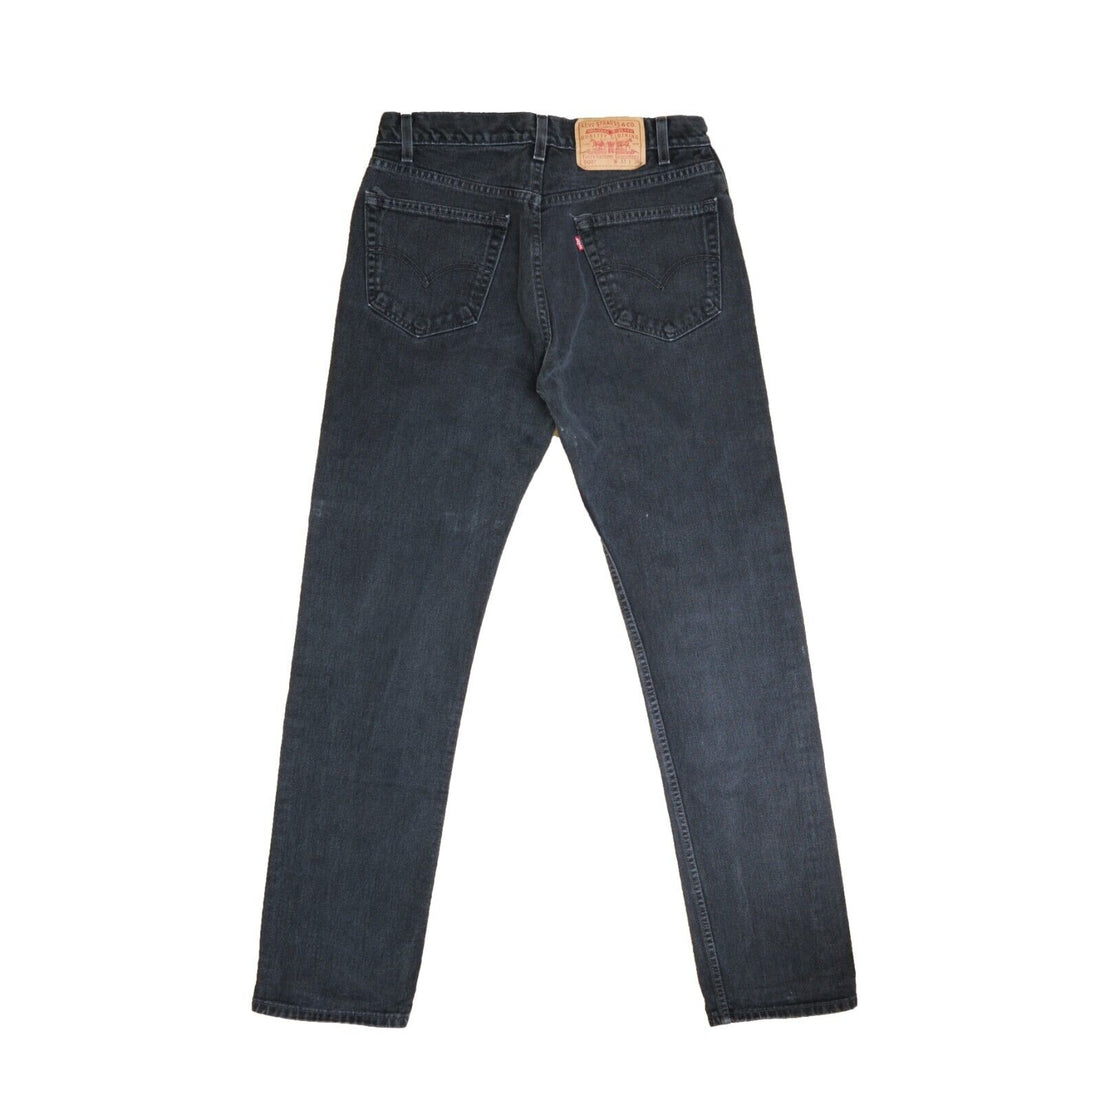 Vintage Levi Strauss & Co 505 Denim Jeans Size 33 X 36 Black 00505-0260